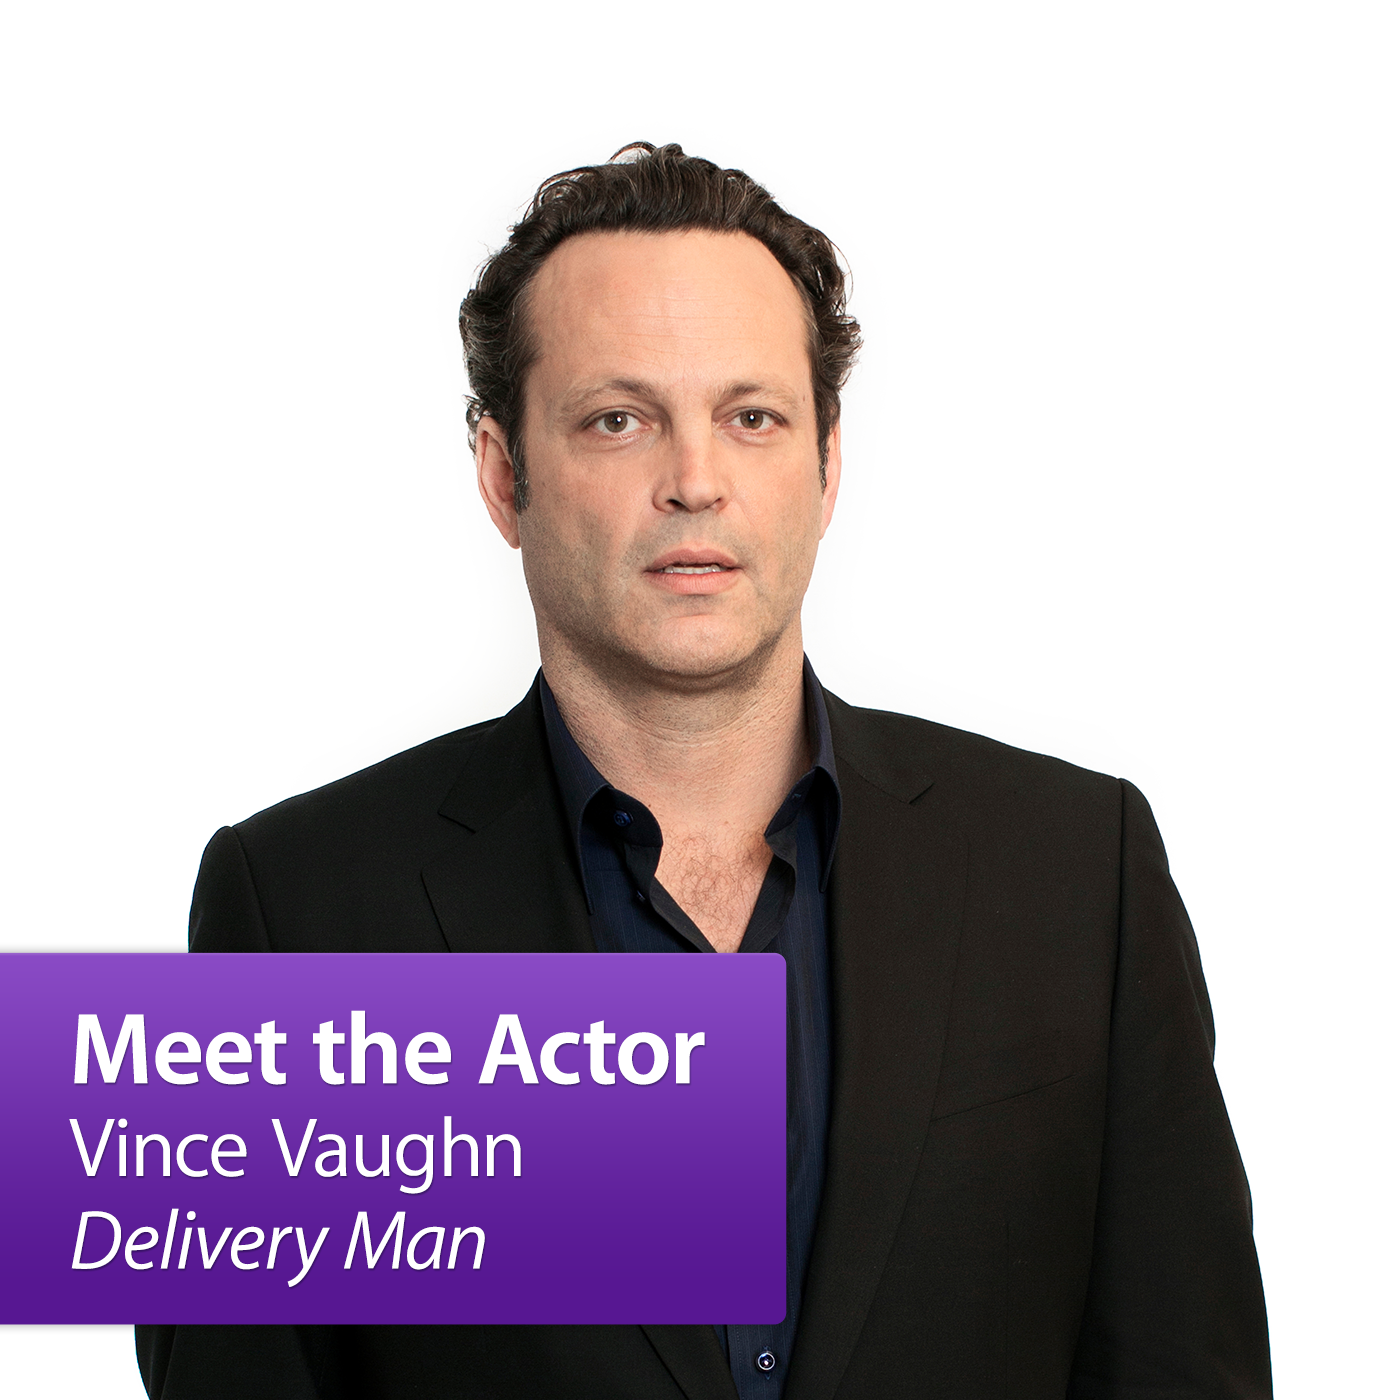 Vince Vaughn, "Delivery Man": Meet the Actor